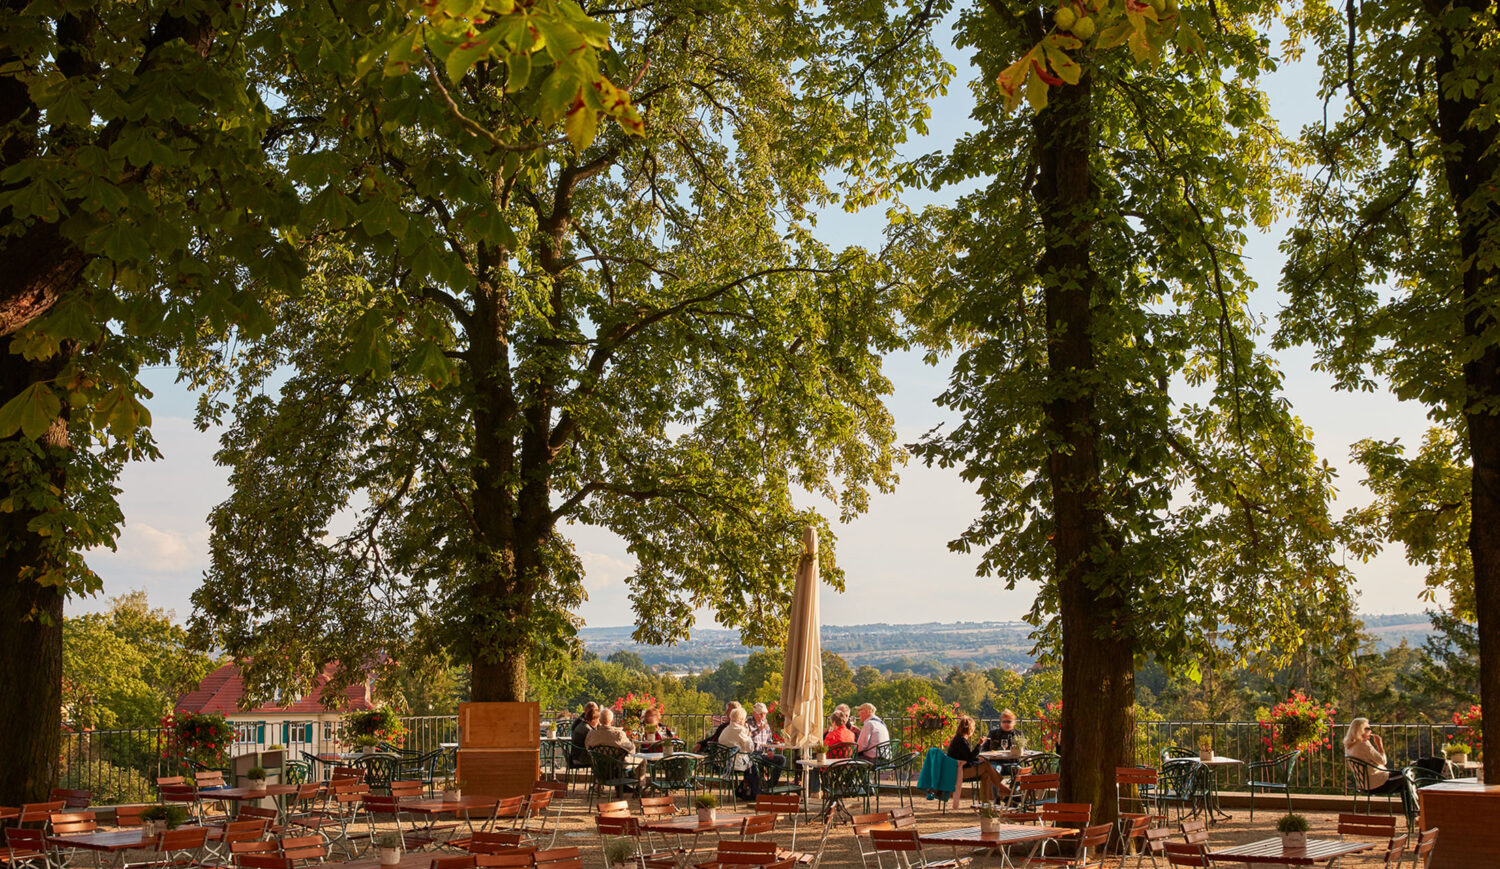 Don't miss - a relaxing evening on the Hoflößnitz wine terrace